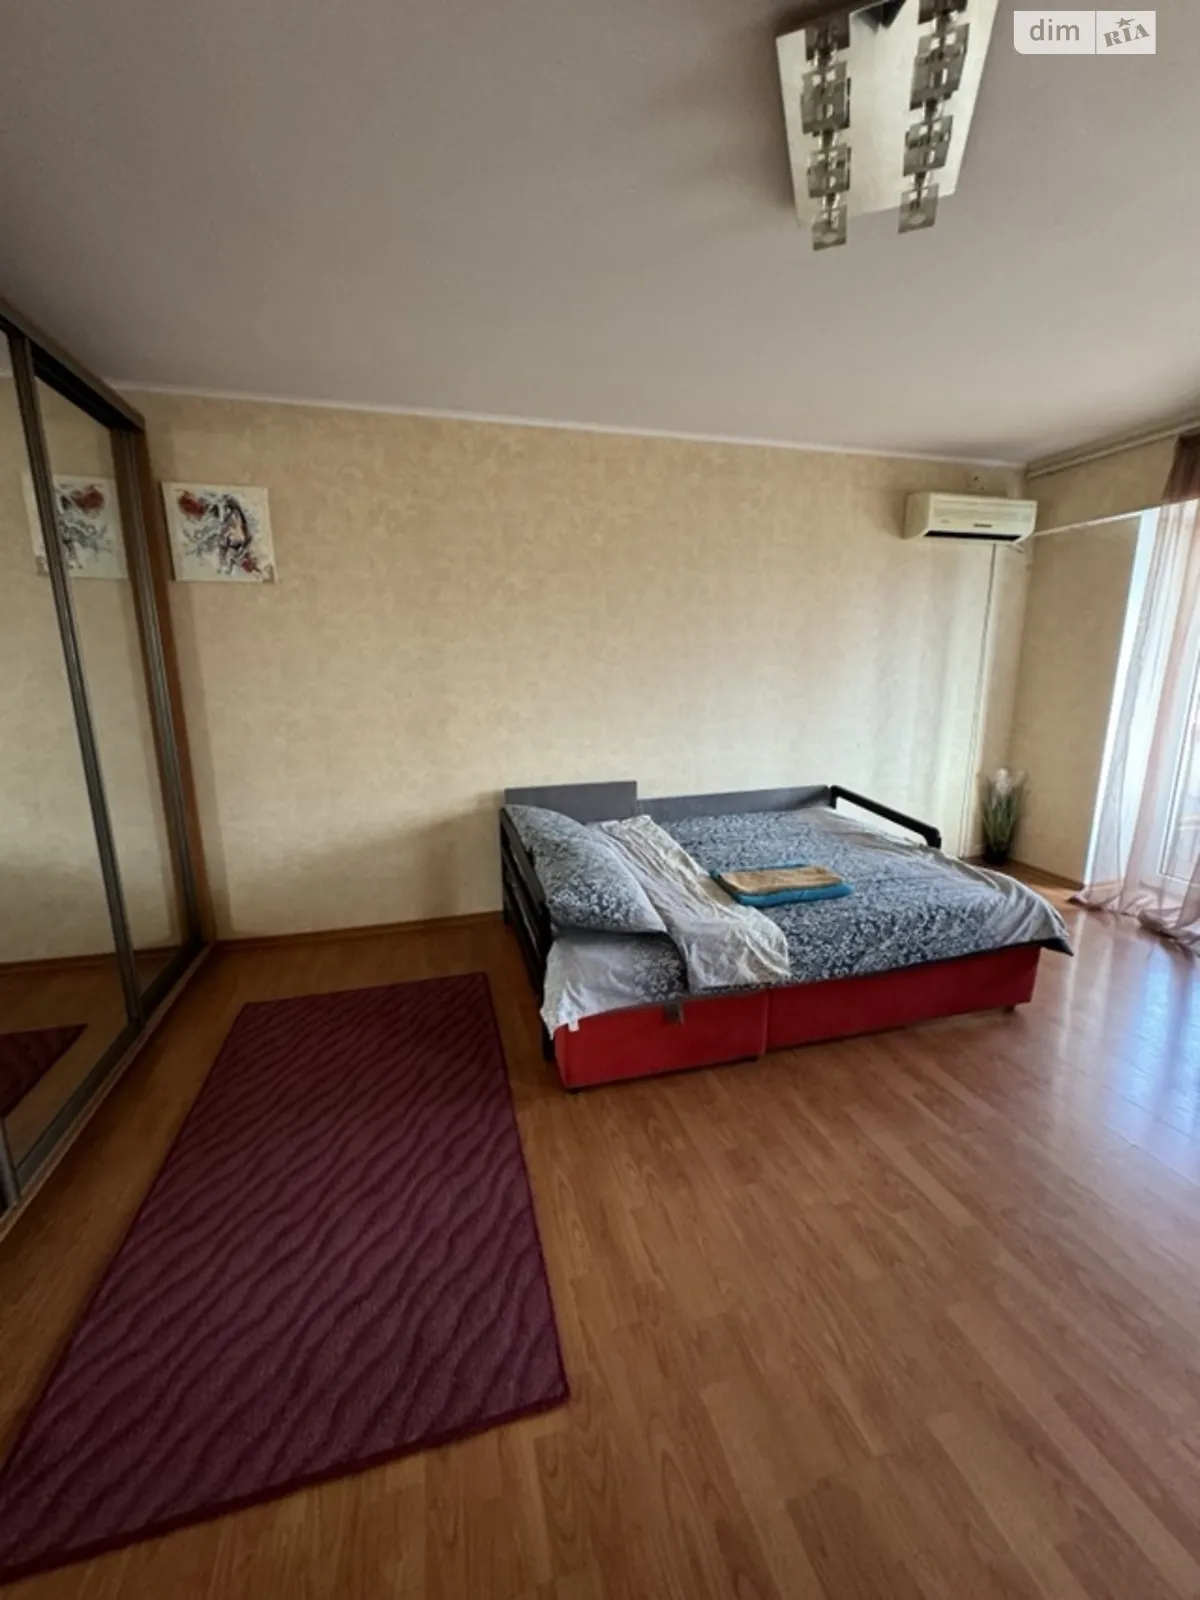 1-кімнатна квартира у Запоріжжі, цена: 800 грн